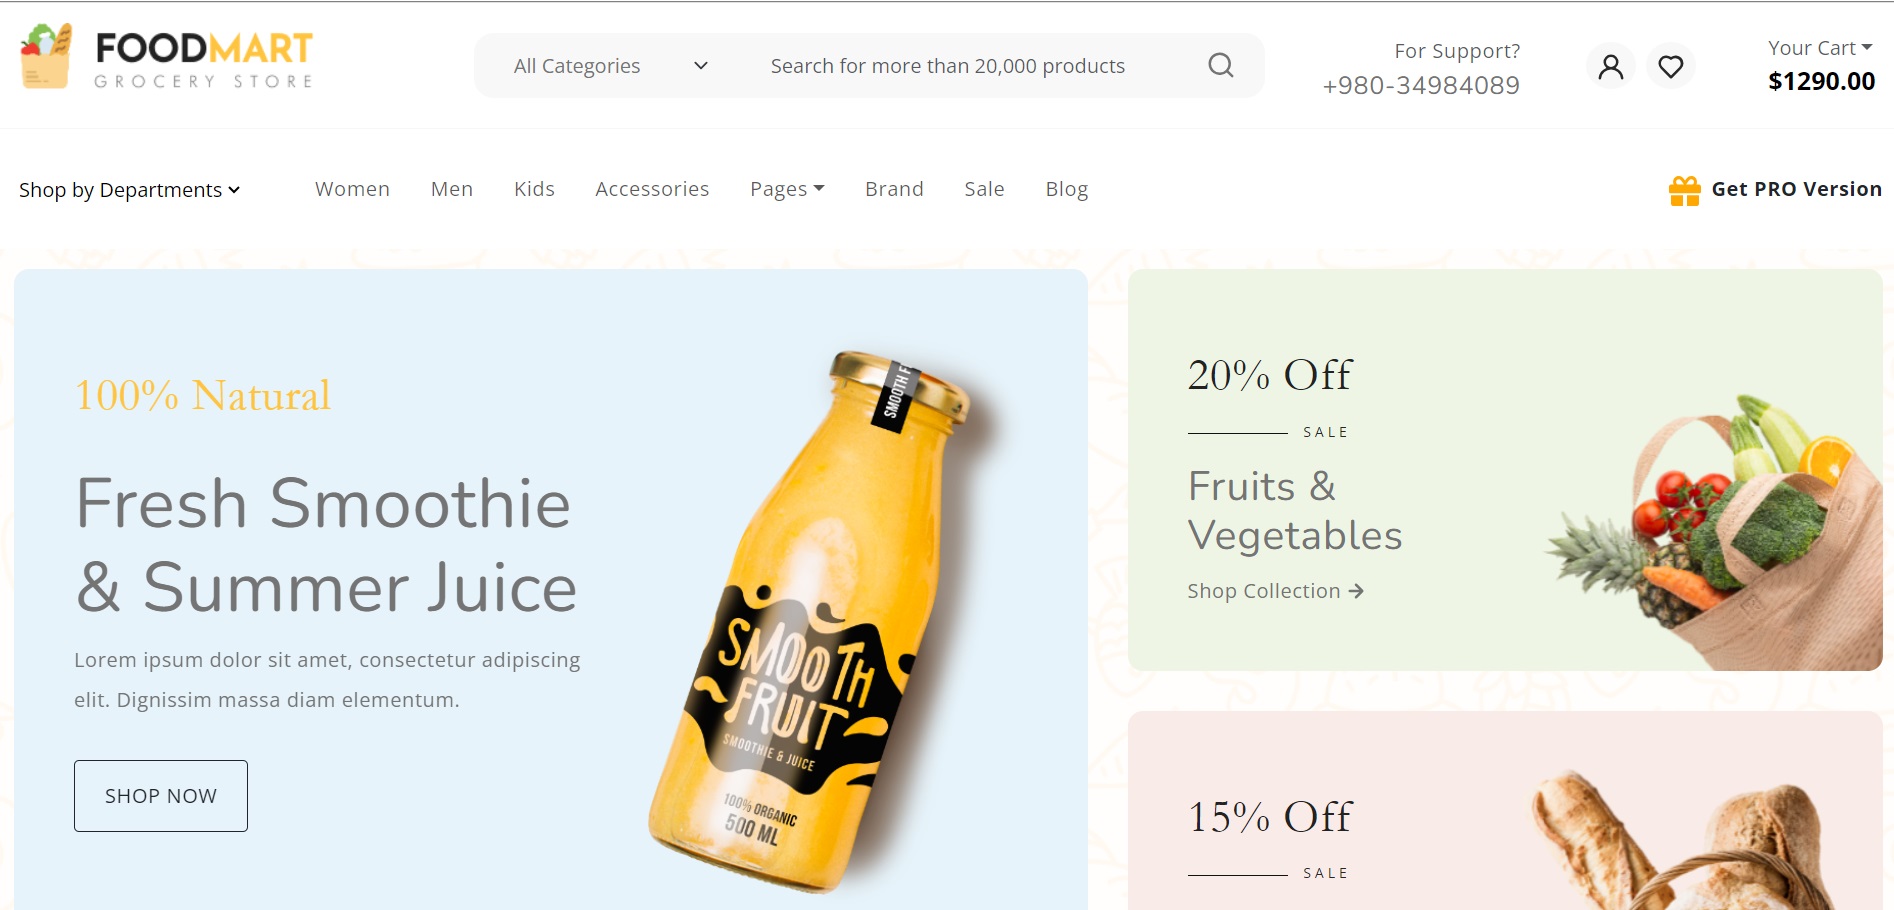 Vue Free FoodMart Ecommerce Website Template